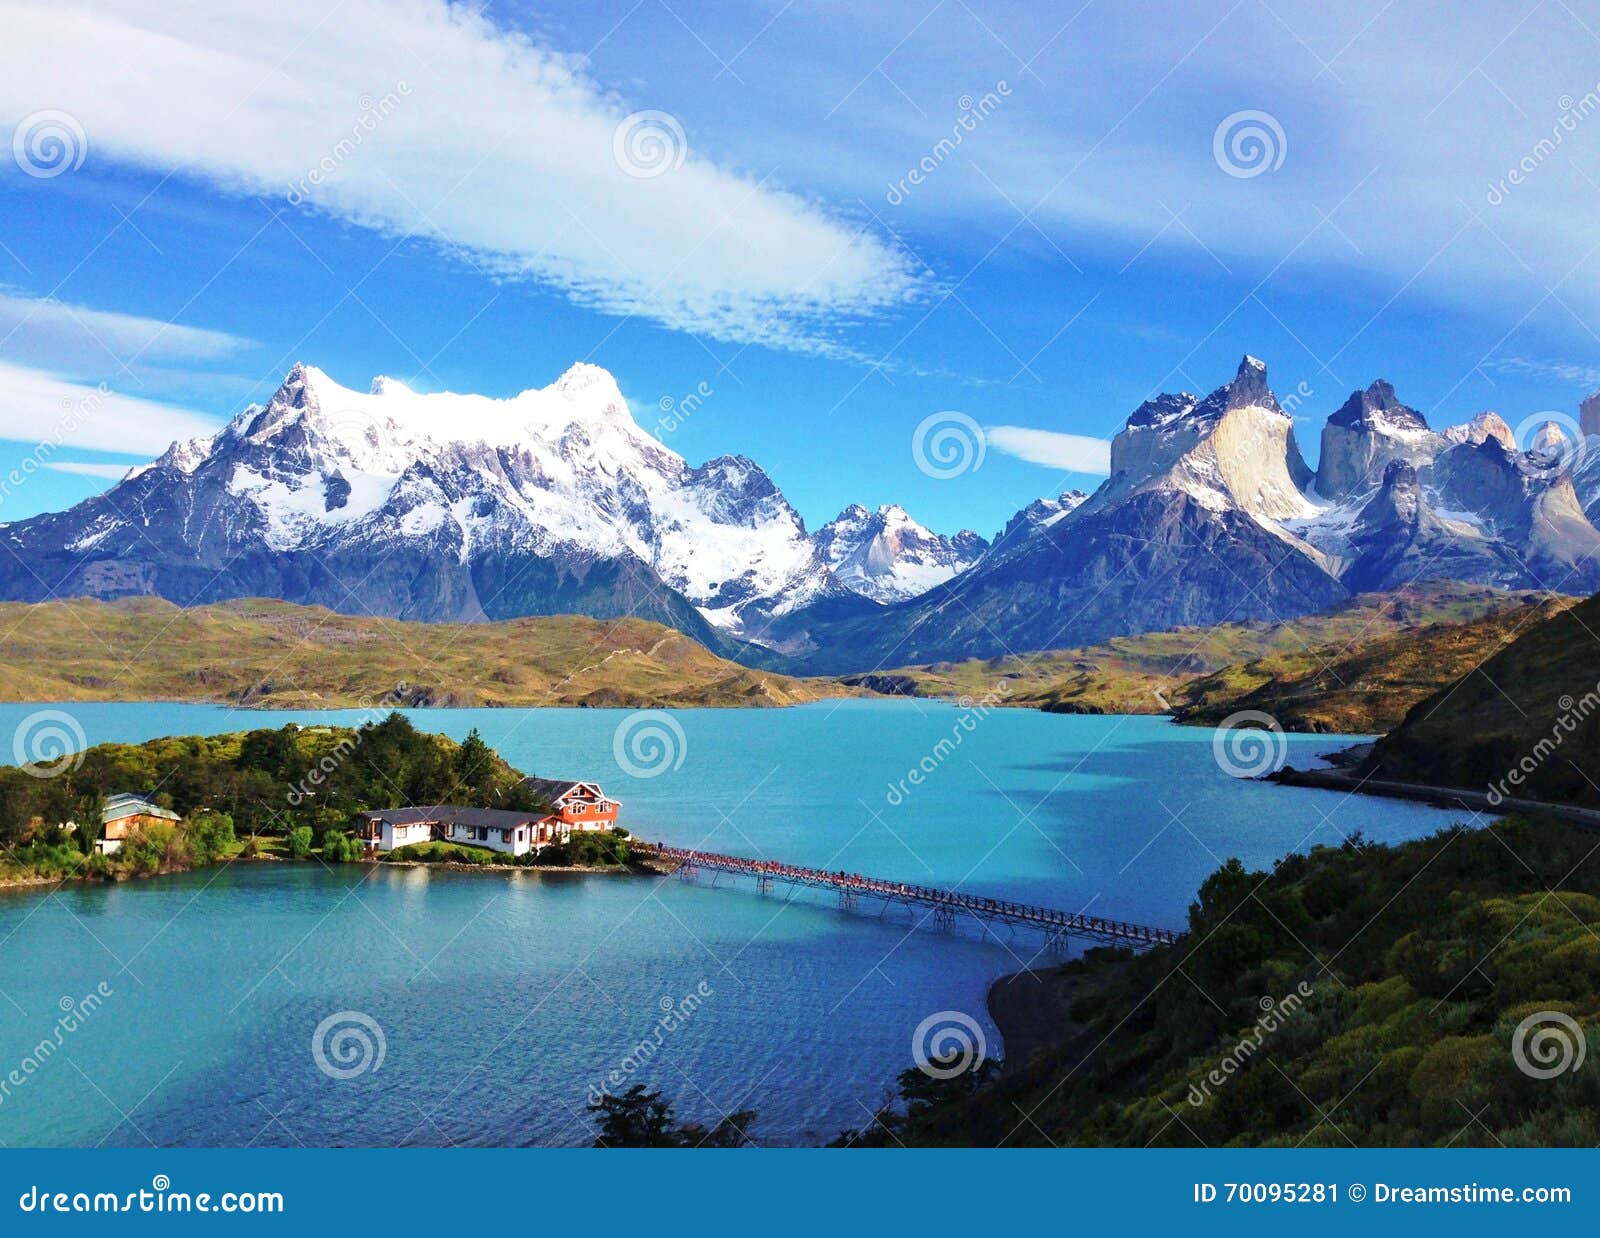 landscape - torres del paine, patagonia, chile